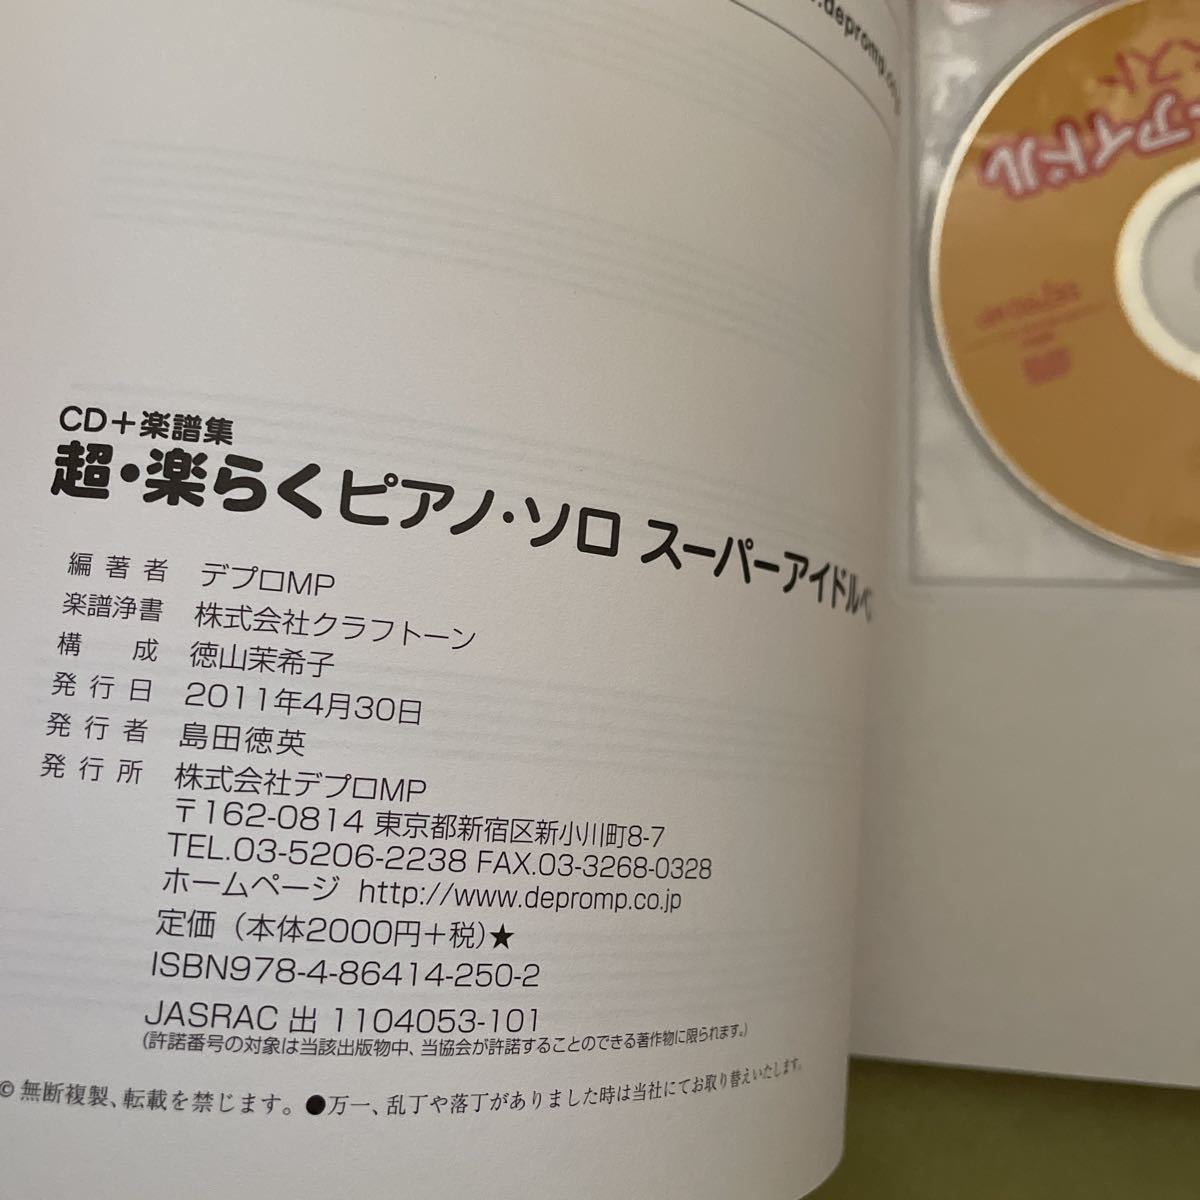 CD+楽譜集 超楽らくピアノソロ スーパーアイドルベスト 全音名フリガナ両手指番号付 (嵐)